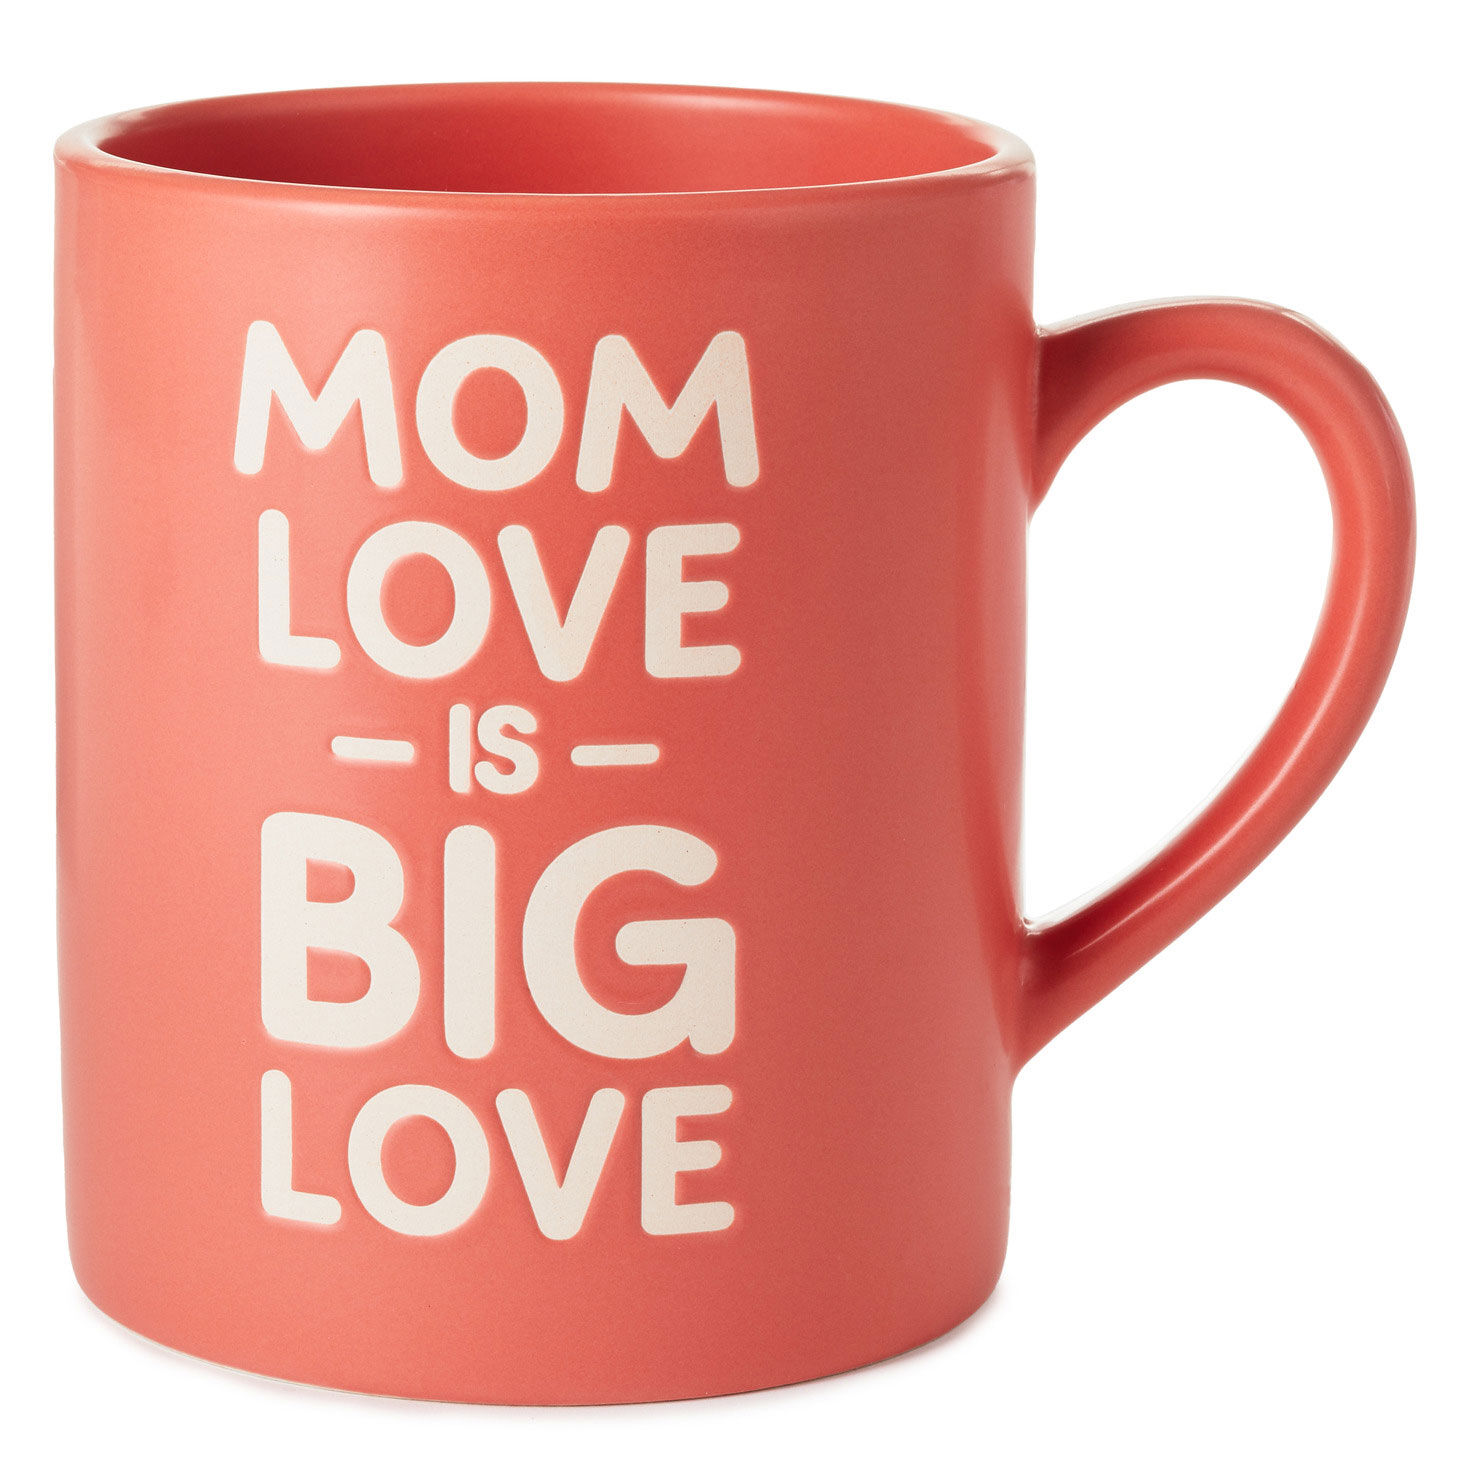  Mom Coffee Mugs, I Love You Mug, My Little Heart Cup